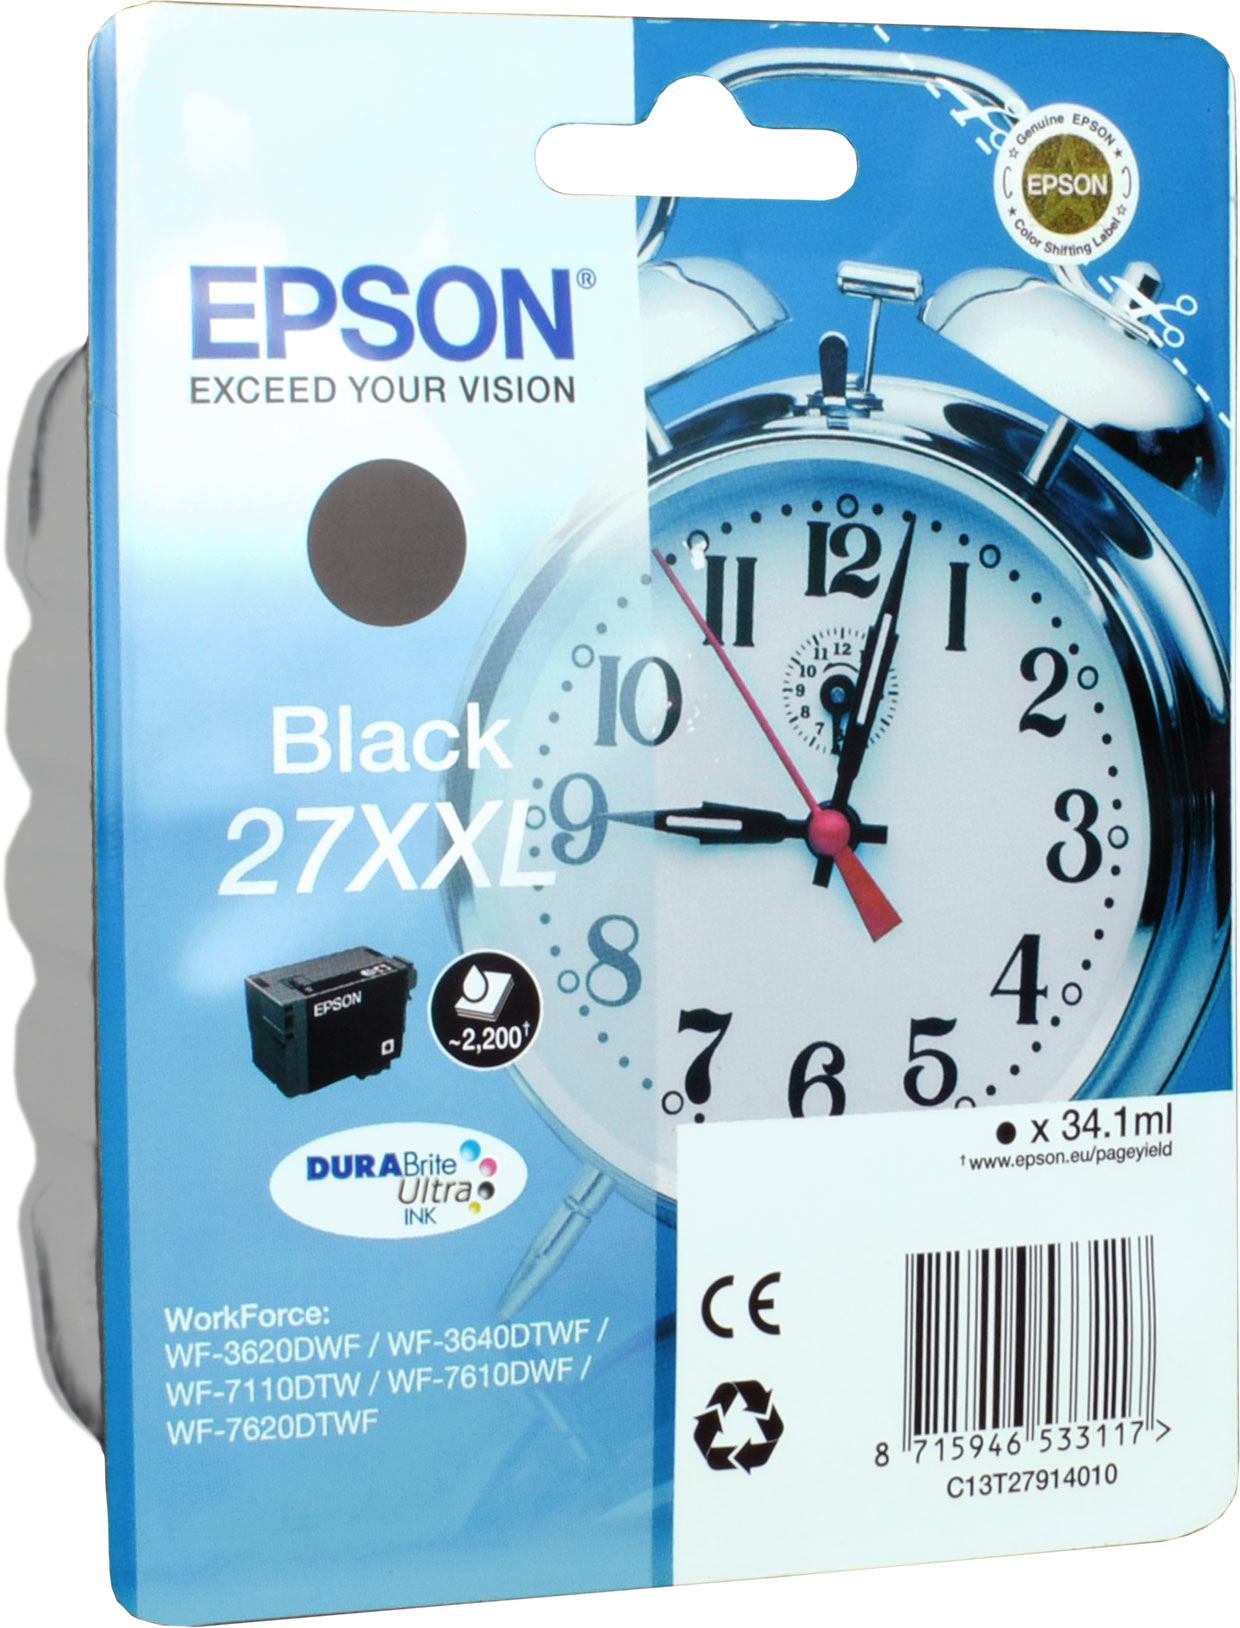 Epson Tinte C13T27914012 Black 27XXL  schwarz